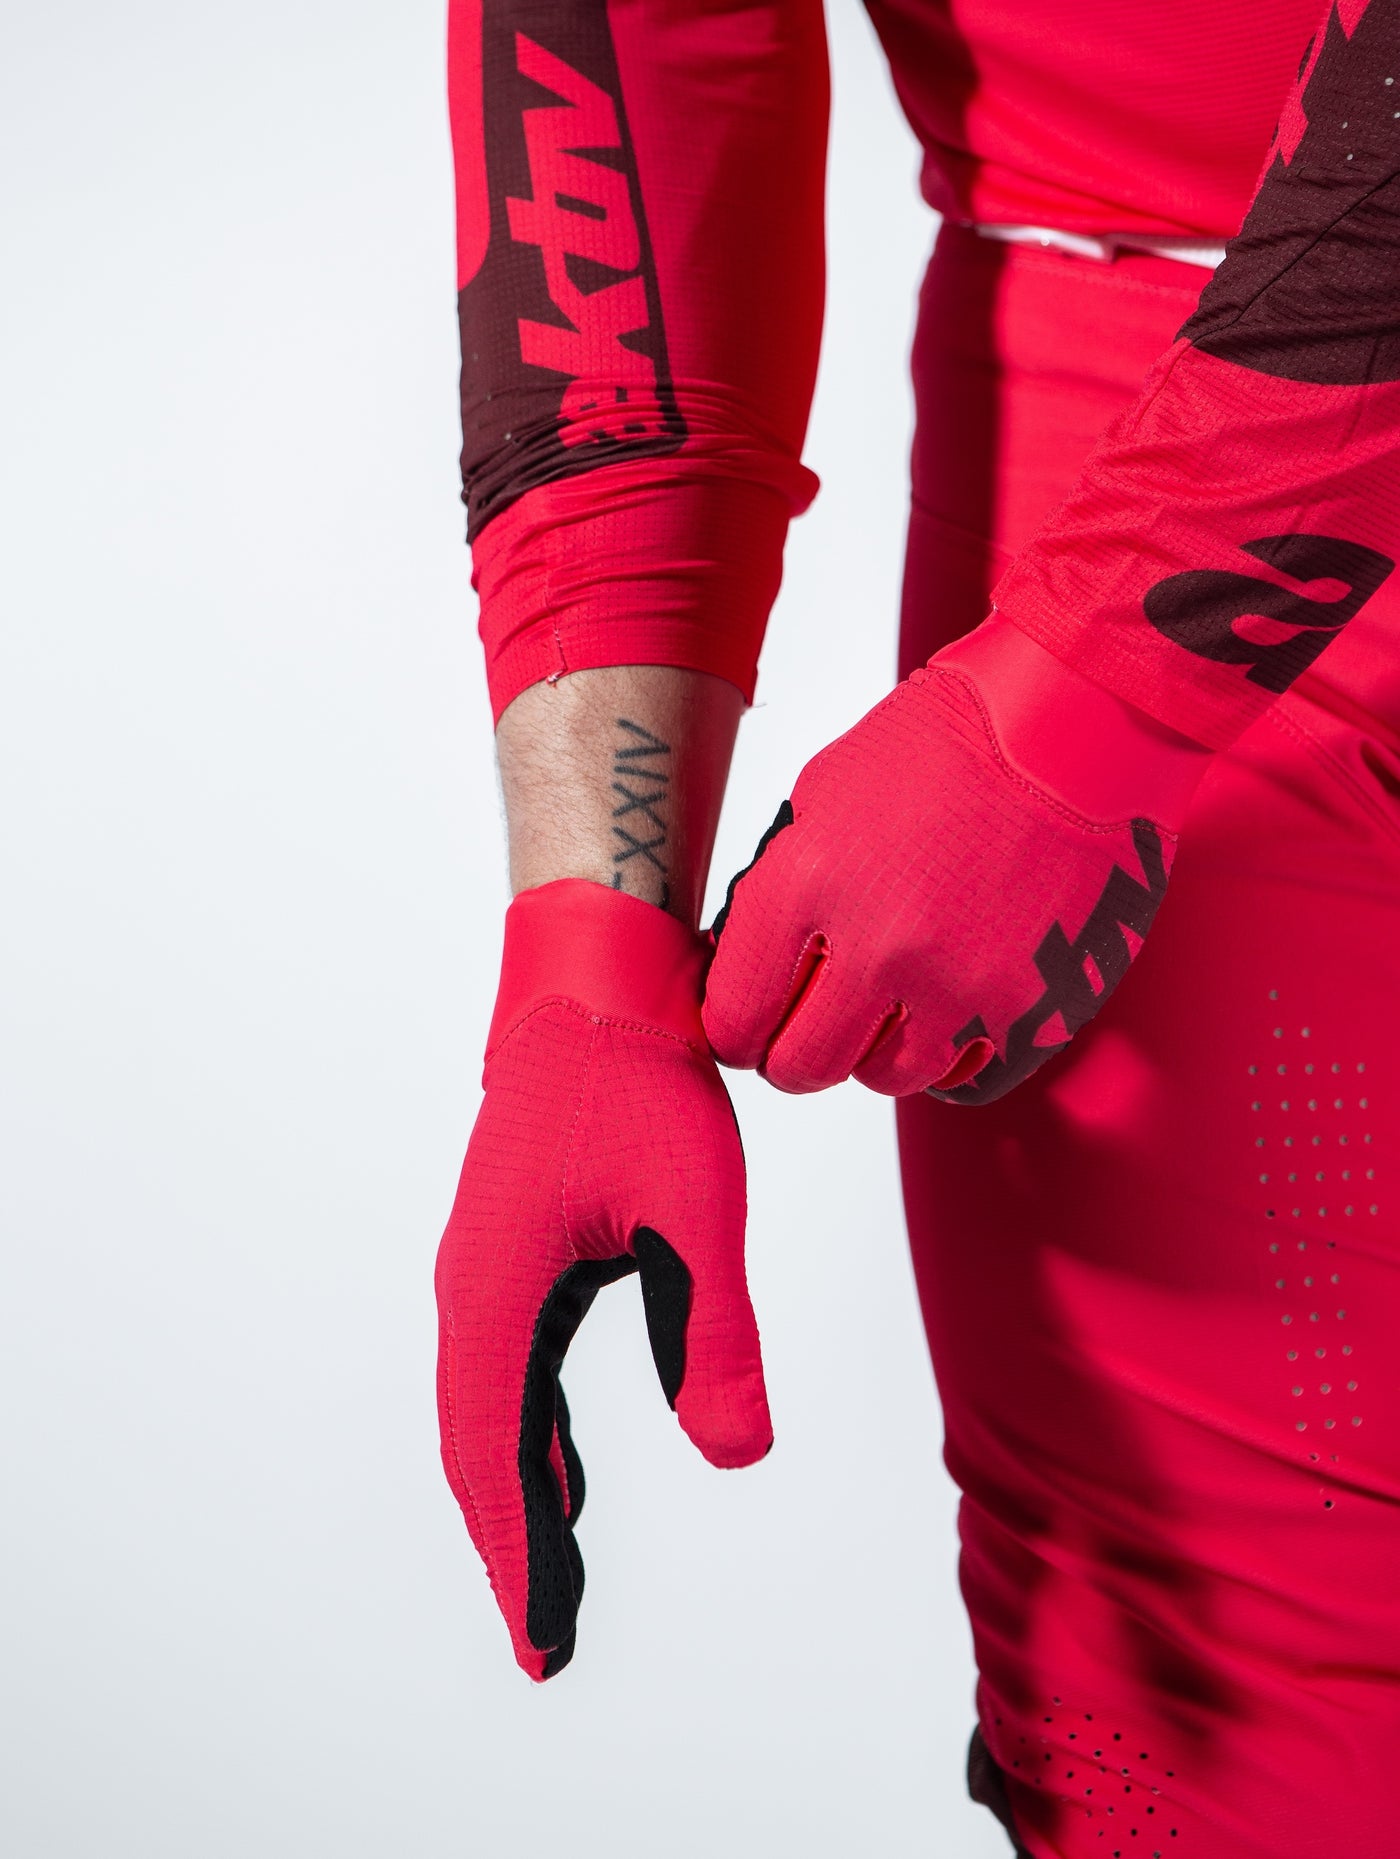 NOVA Strike Red Gloves